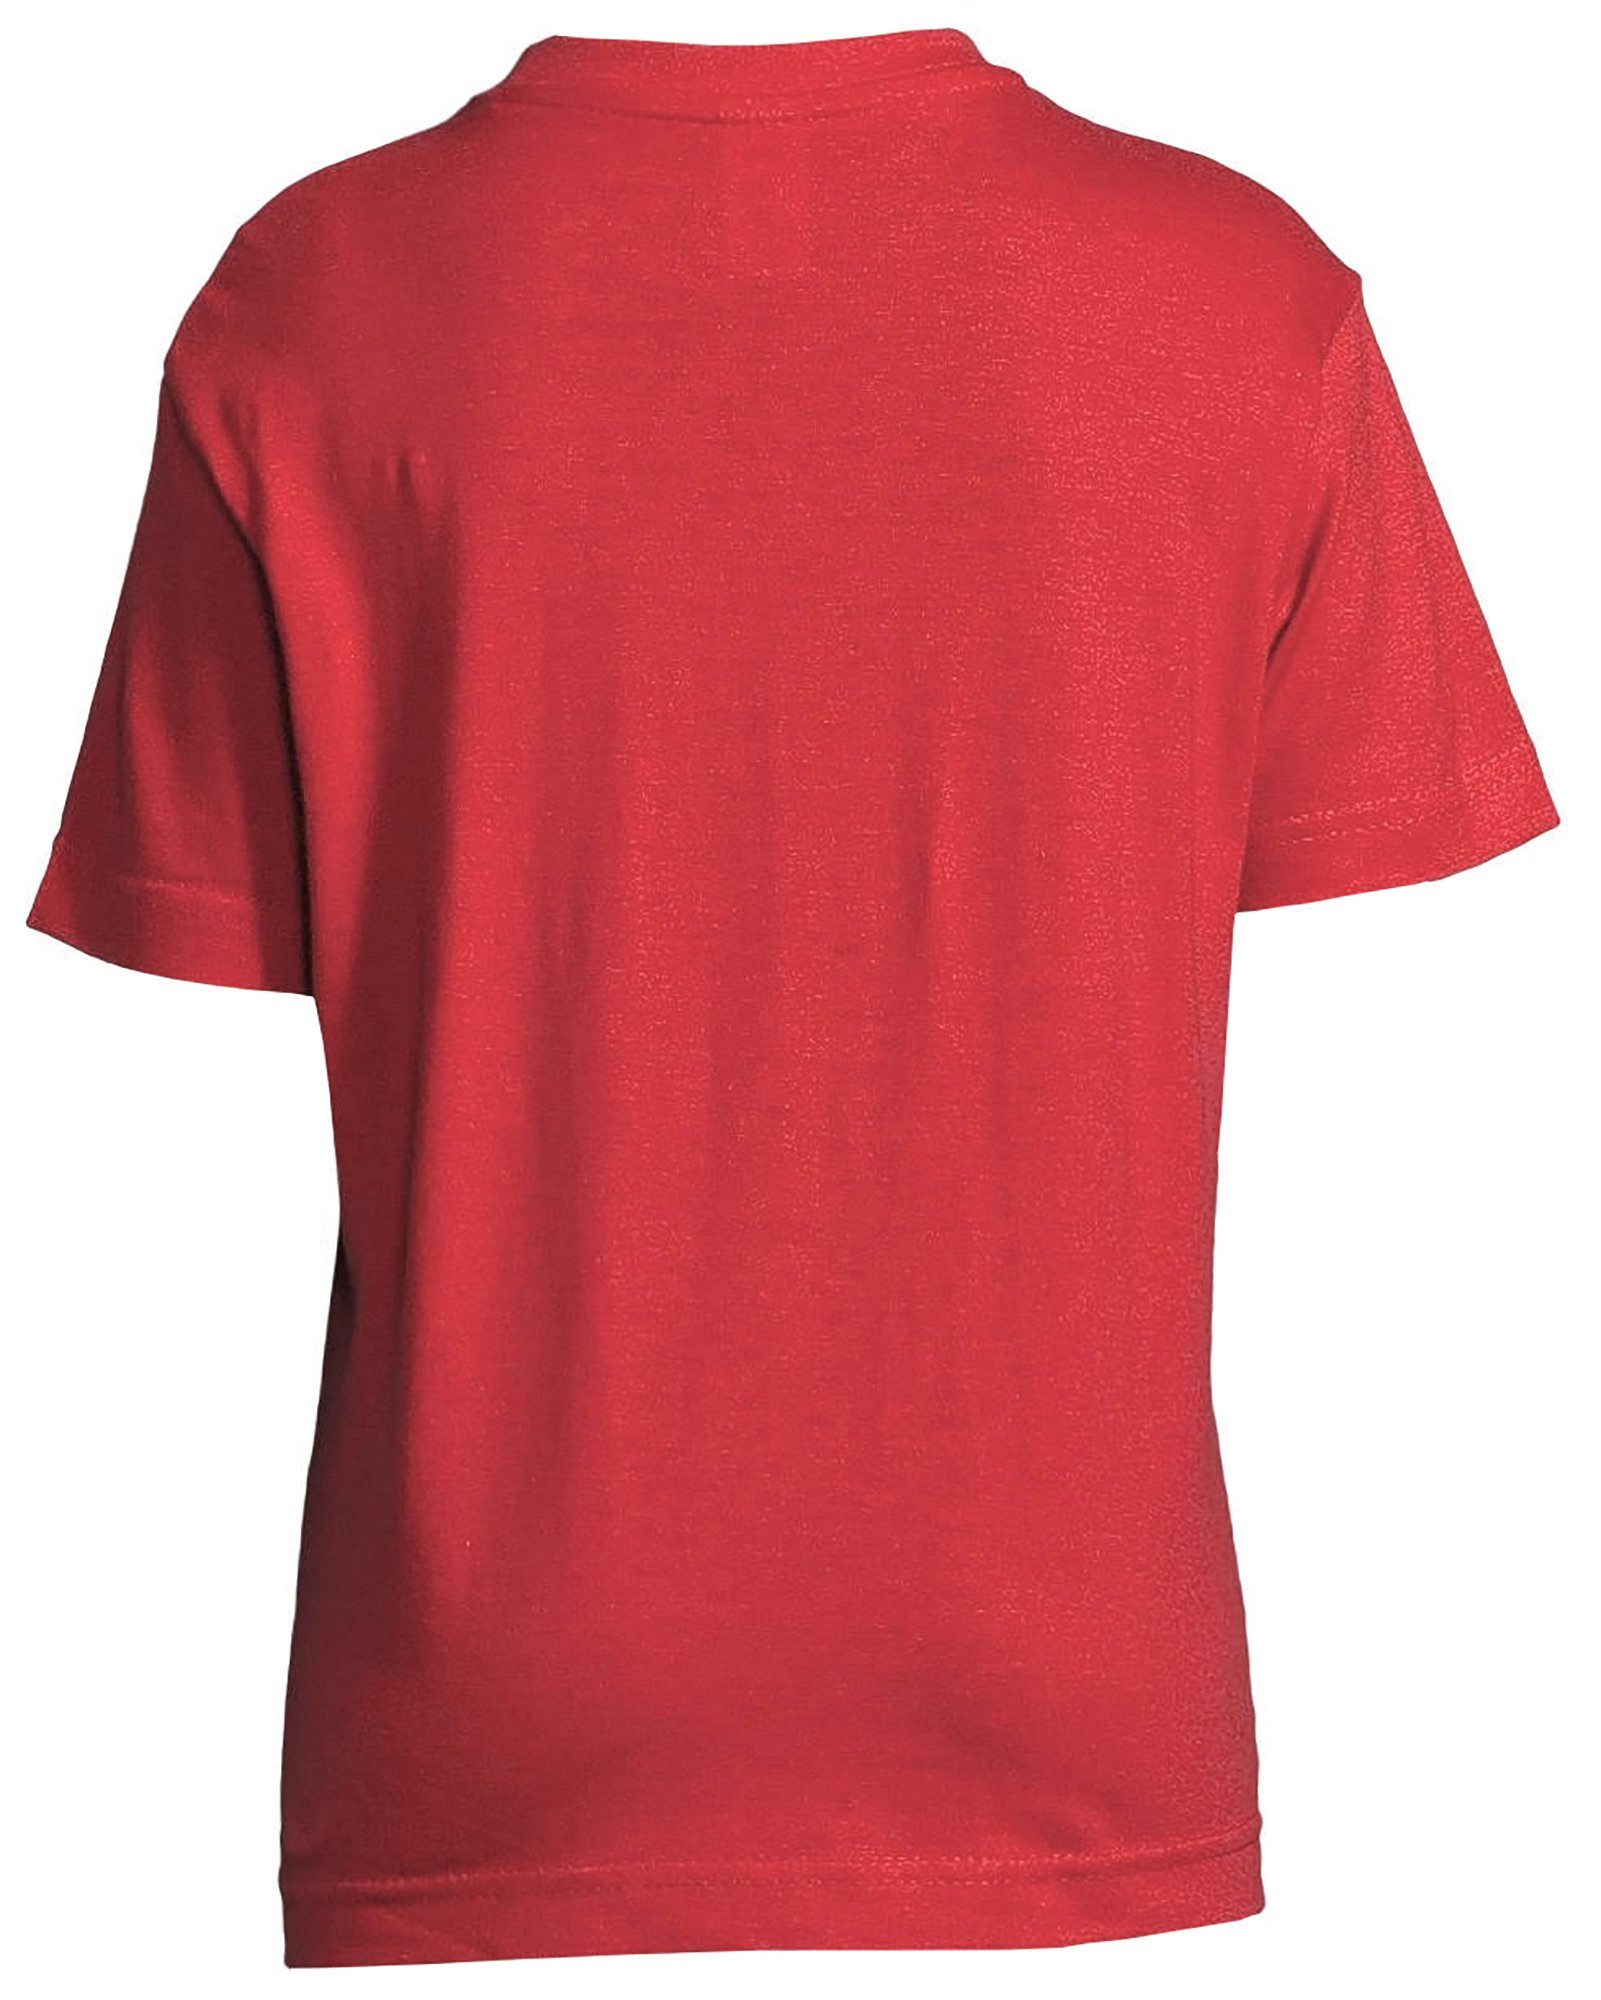 MyDesign24 T-Shirt Baumwollshirt i248 Aufdruck, rot Labrador mit Spielender bedruckt Hunde Print Kinder Welpe - Shirt